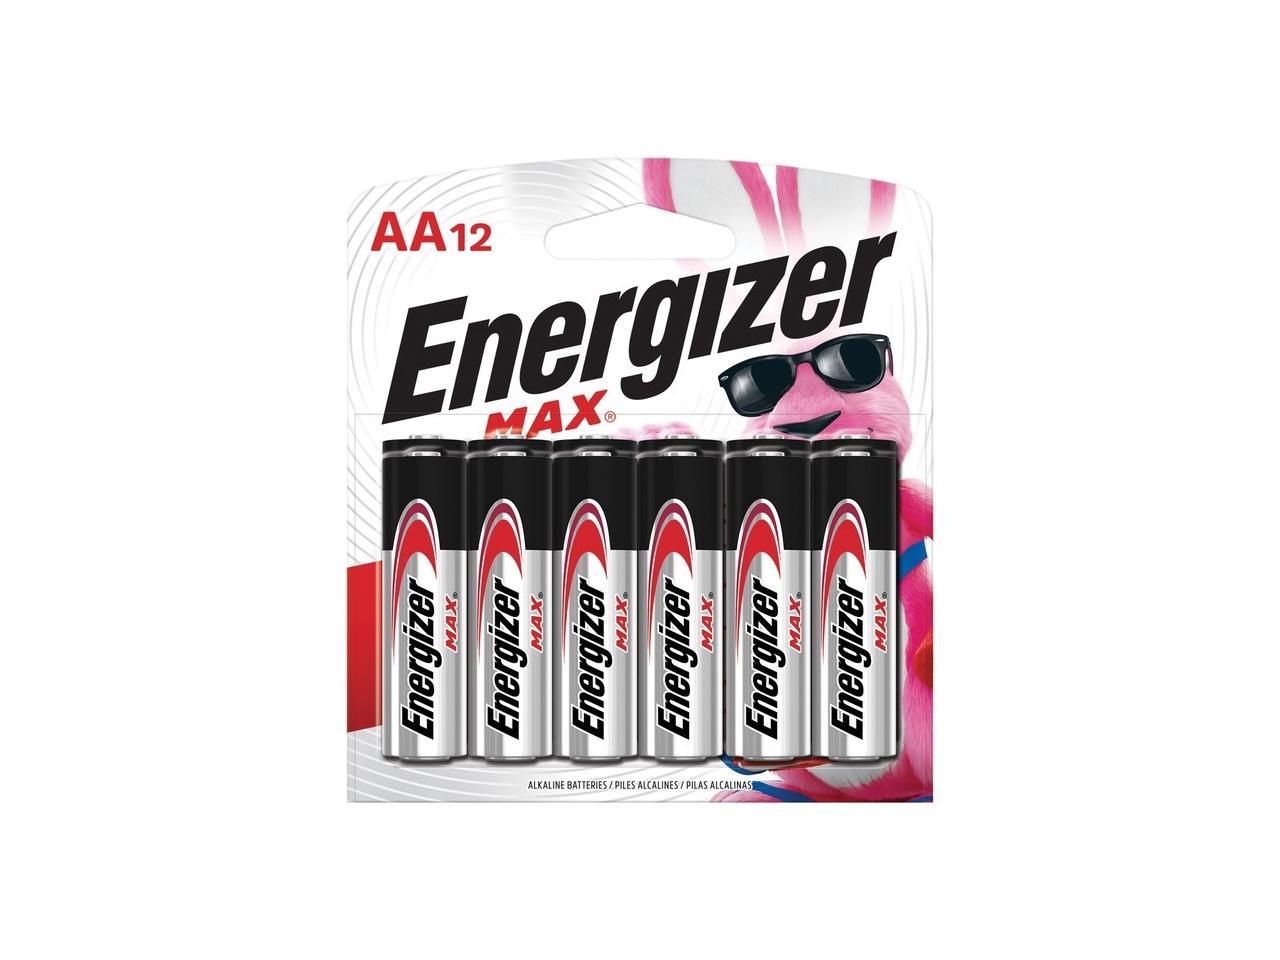 ENERGIZER Max Plus POWERSEAL AA Alkaline Battery, 12-pack